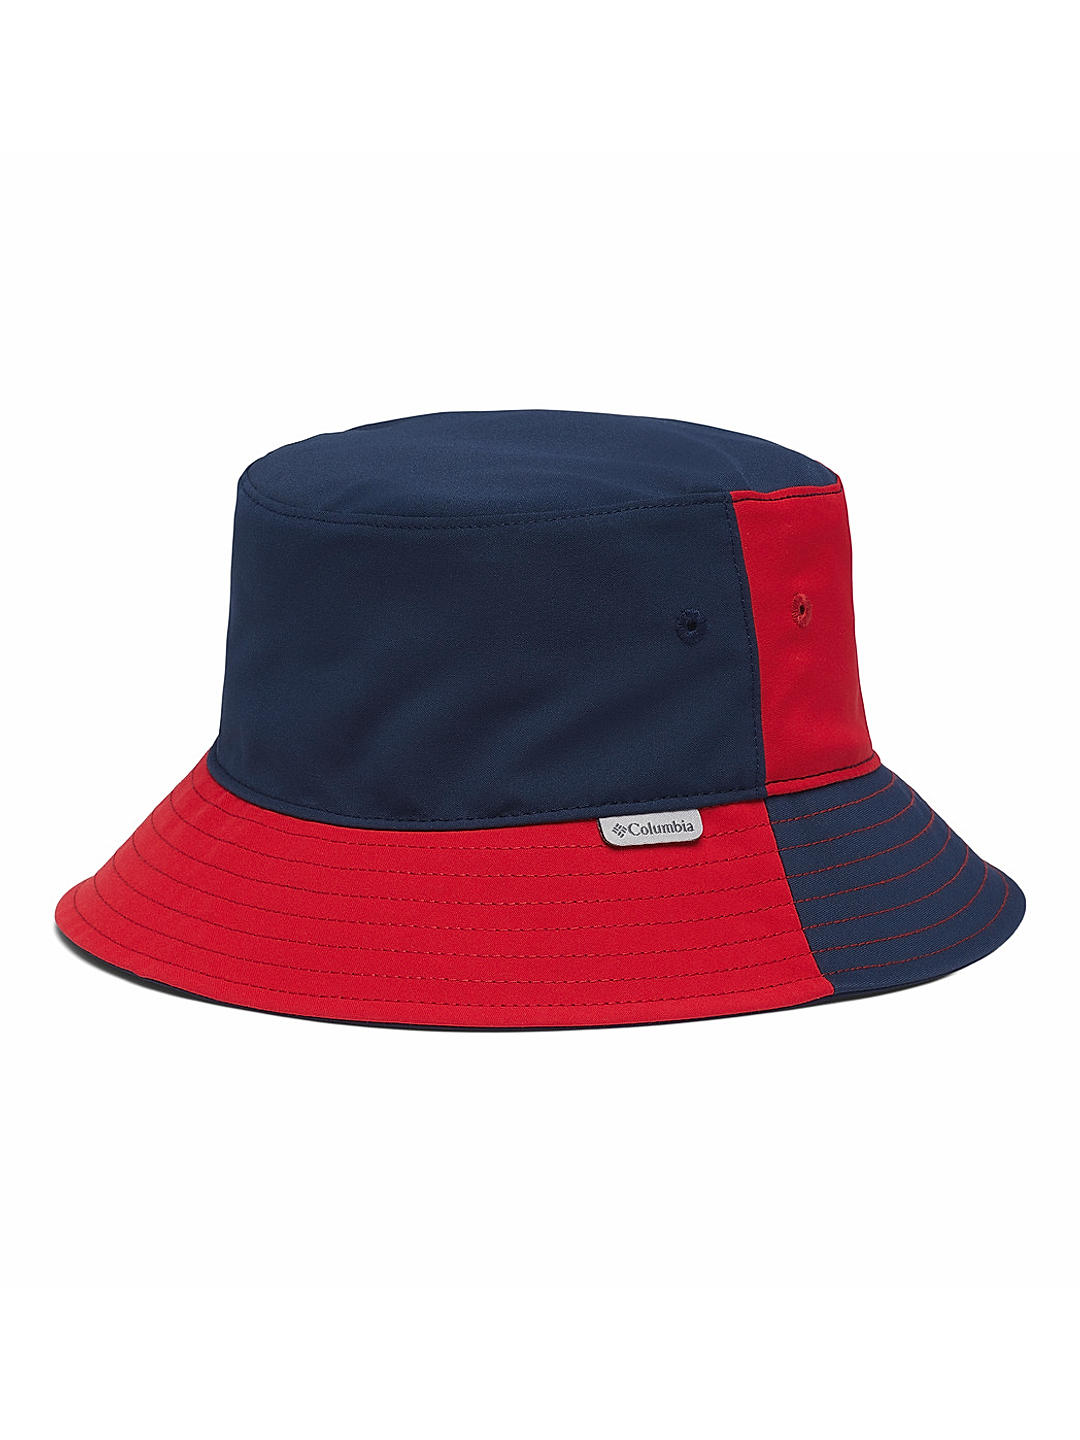 Columbia Kids Unisex Blue Bucket Hat (Sun Protection)